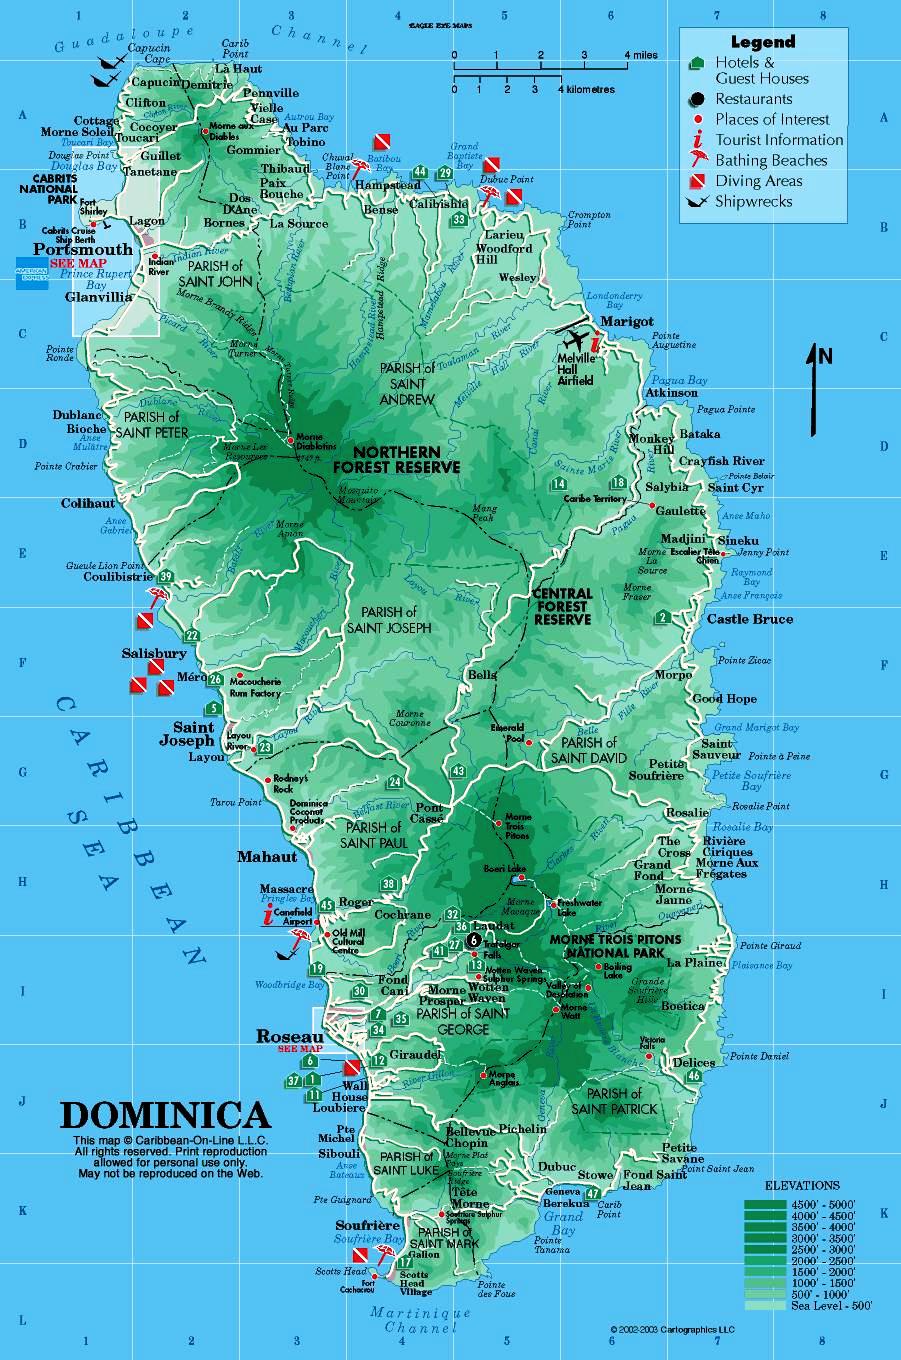 Dominica - island map